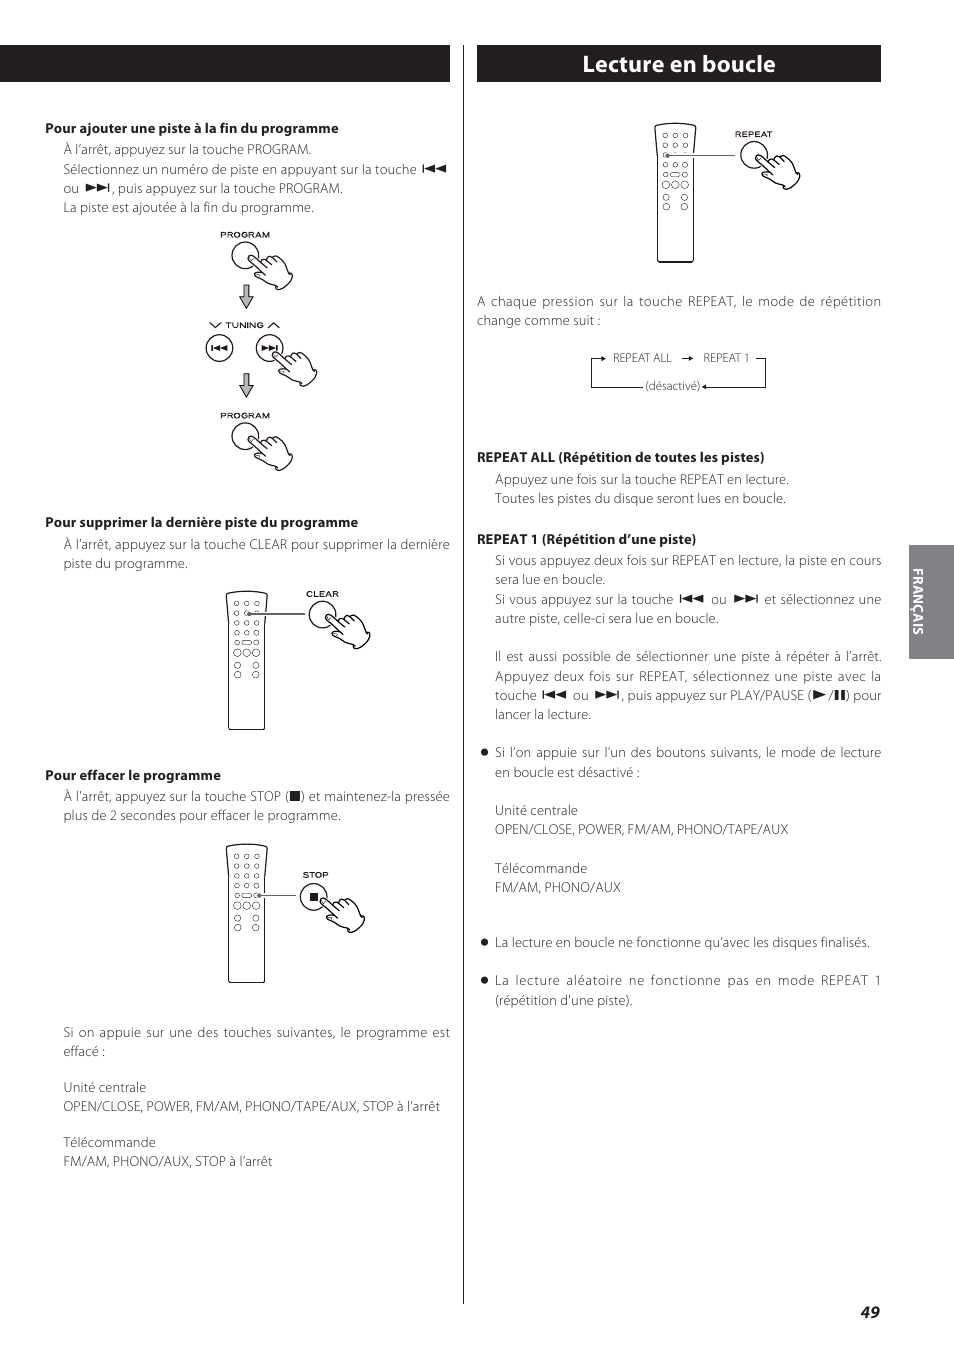 Lecture en boucle | Teac GF-550 User Manual | Page 49 / 96